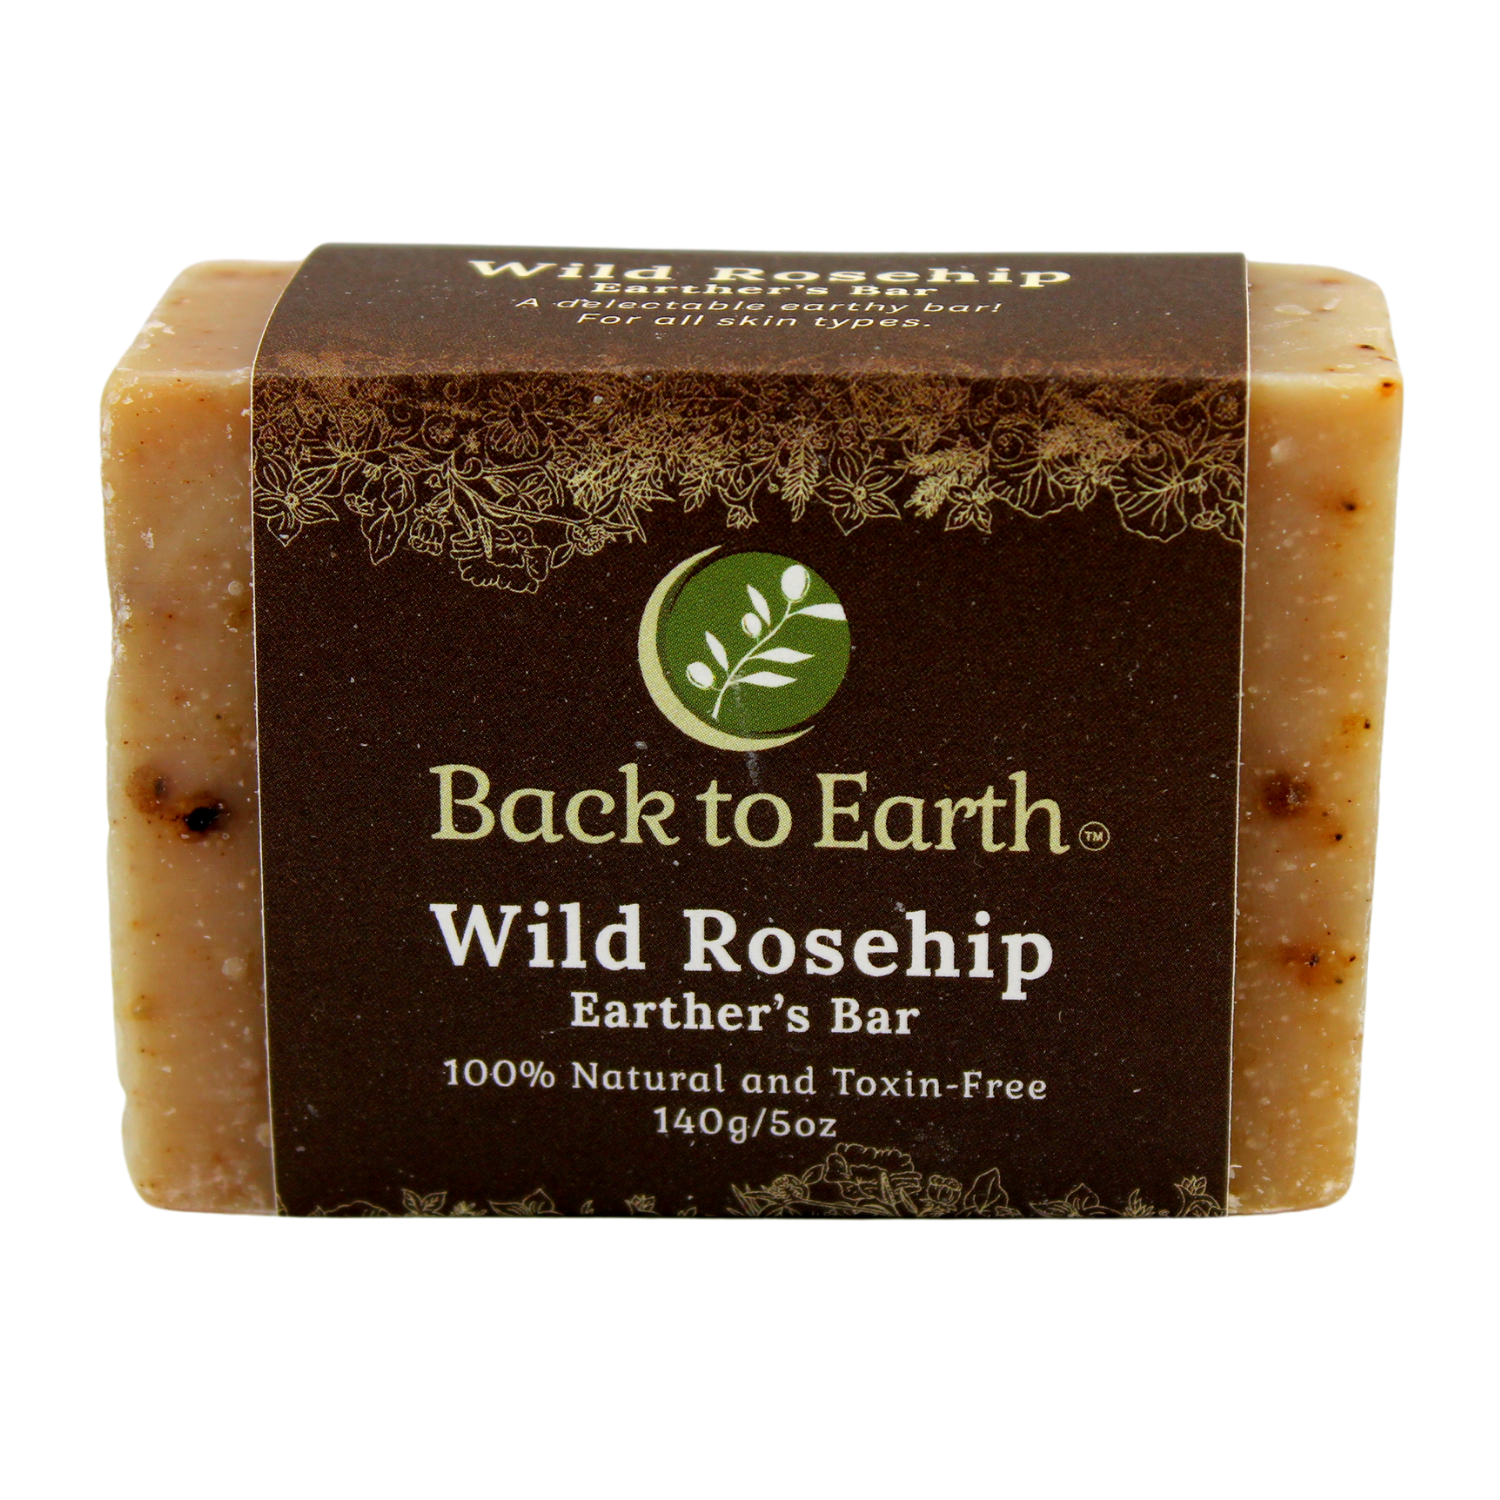 Wild Rosehip Earthers' Bar Soap - 140g